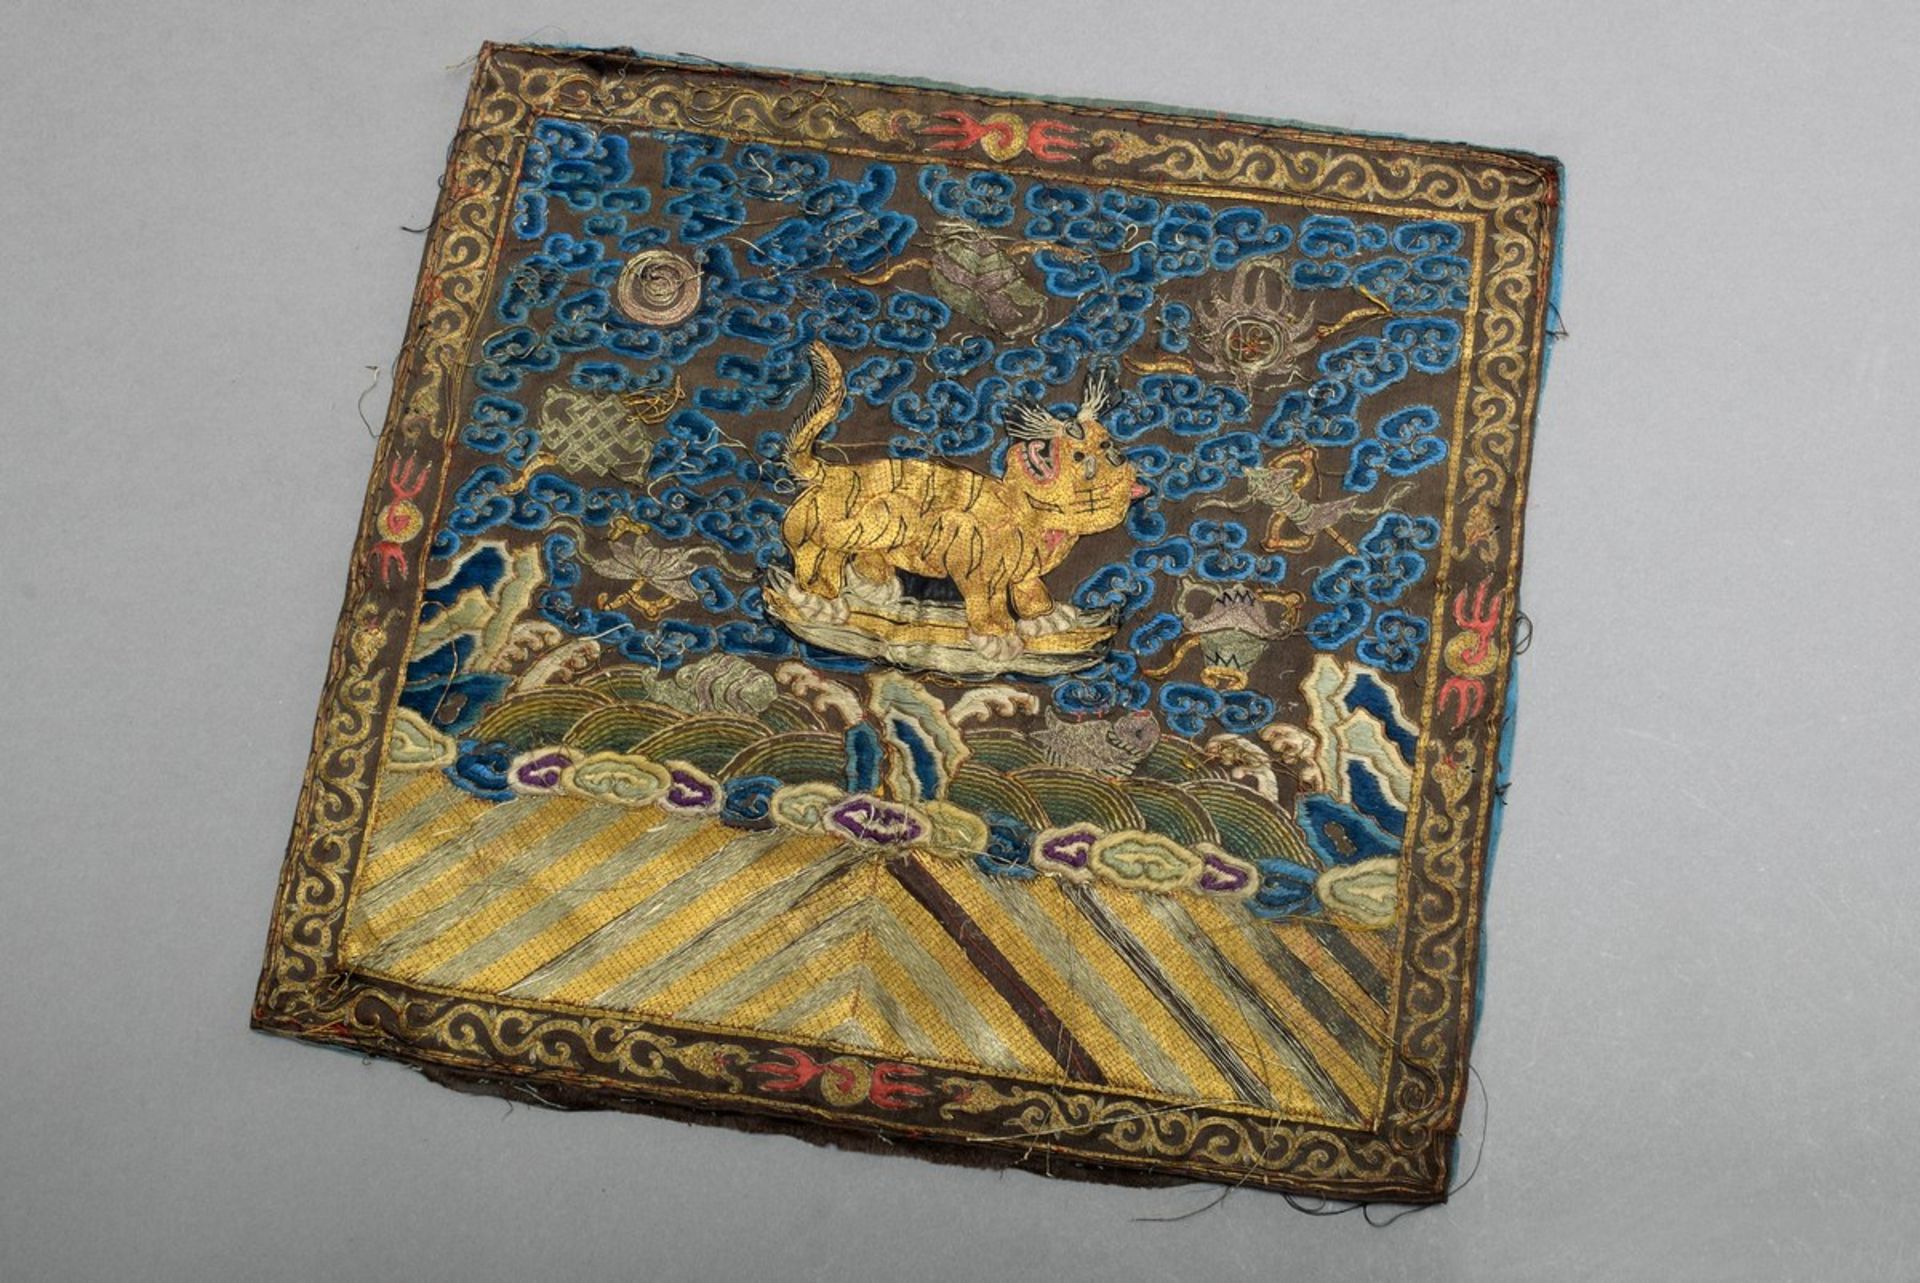 Mandarin insignia "Tiger", 4th military rank, Qing Dynasty, China 19th century, silk with gold thre